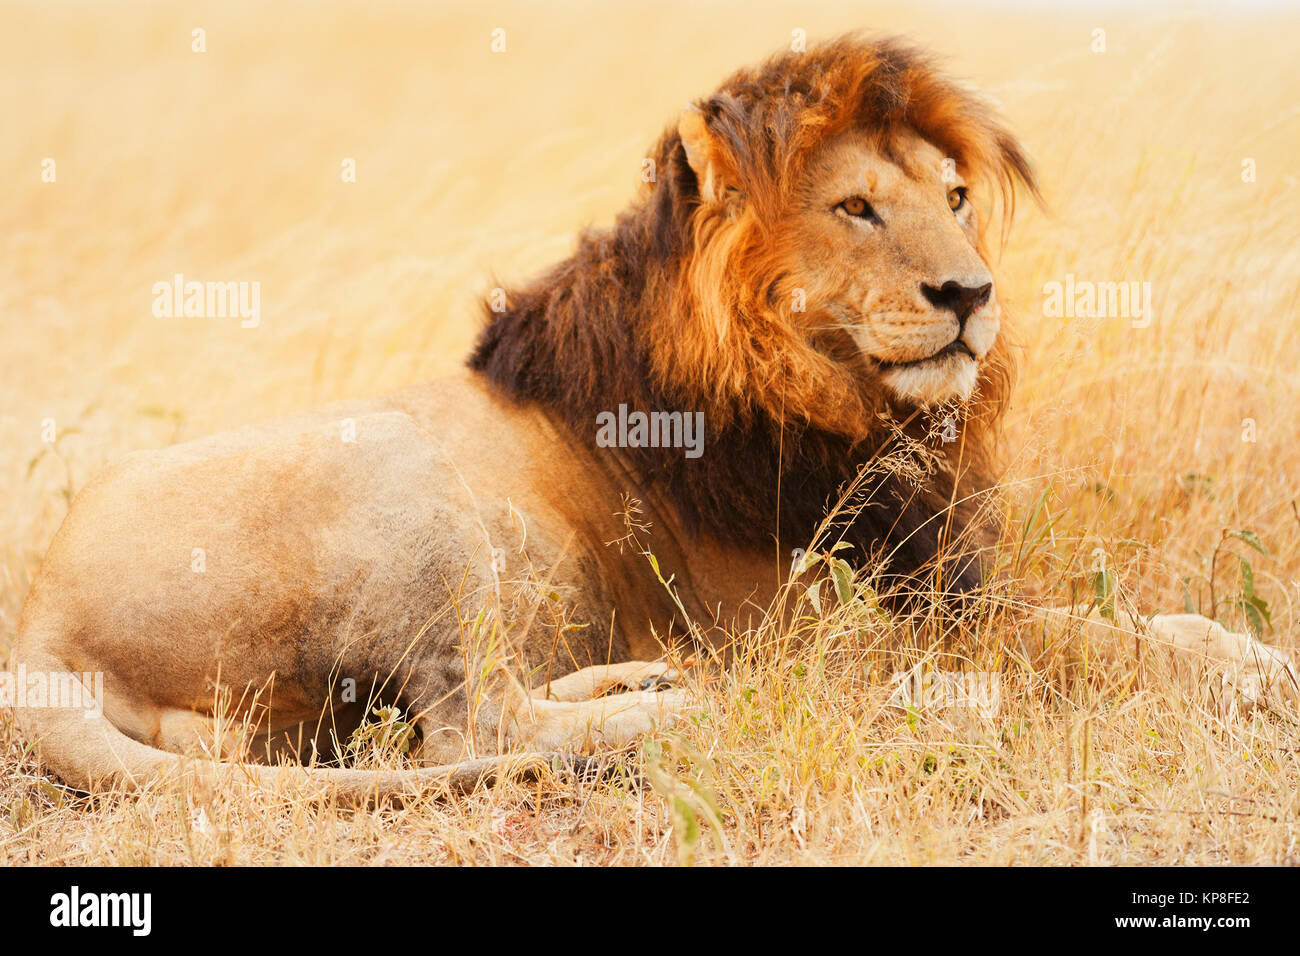 Male lion in Masai Mara,Male lion in Masai Mara,Male lion in Masai Mara,Male lion in Masai Mara Stock Photo